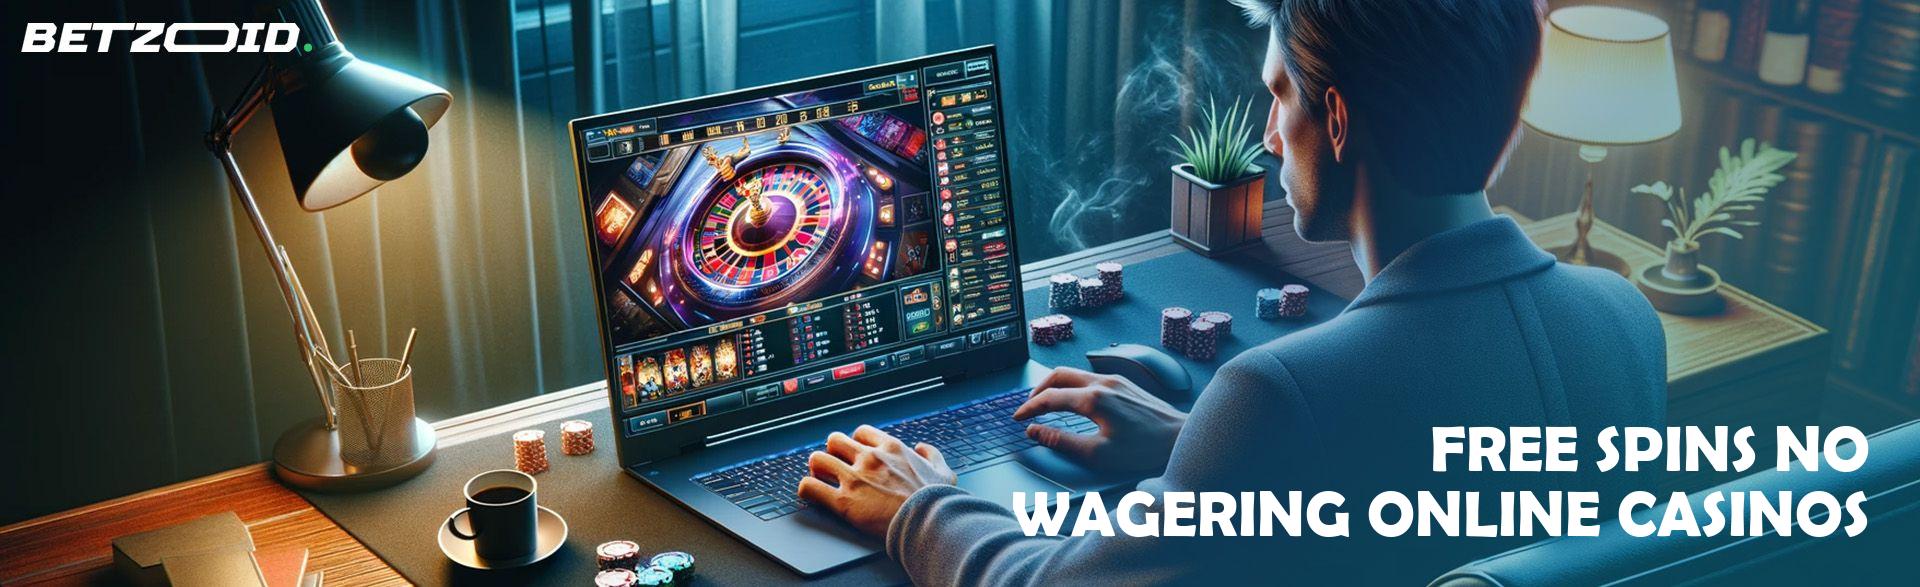 Free Spins No Wagering Online Casinos.